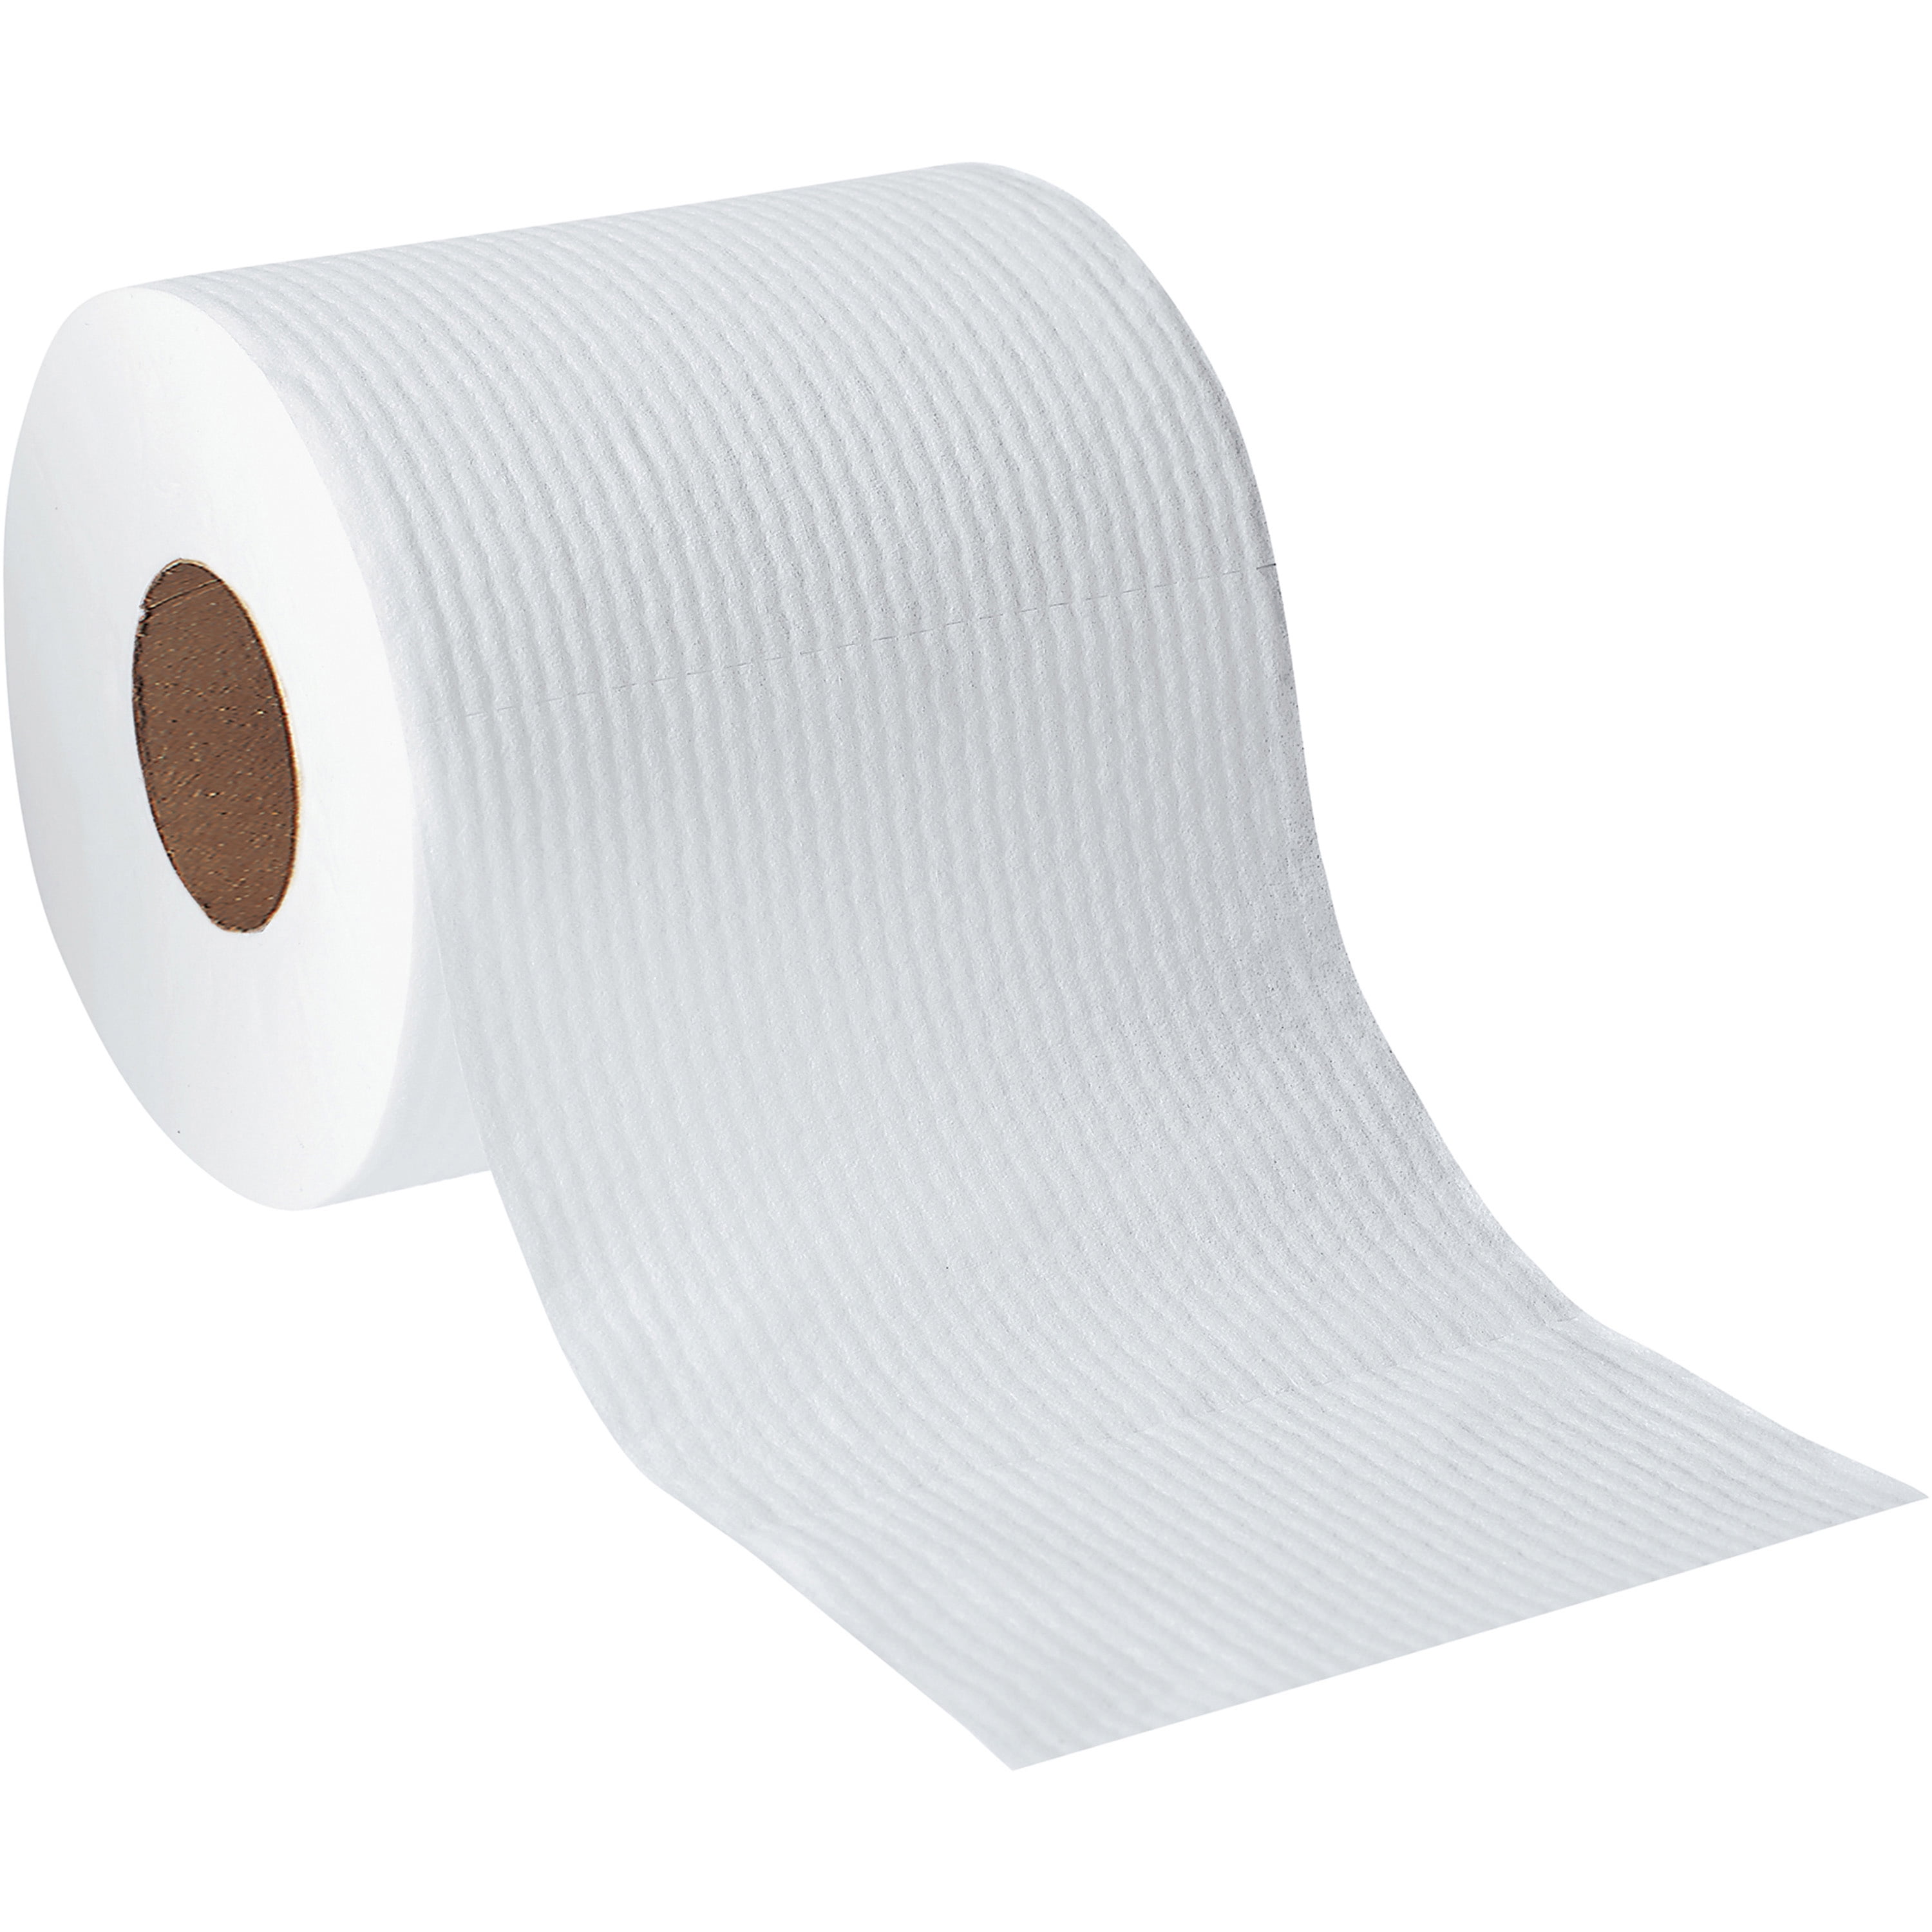 Cottonelle® Professional Standard Toilet Paper - 2-Ply 60x451 Sheets